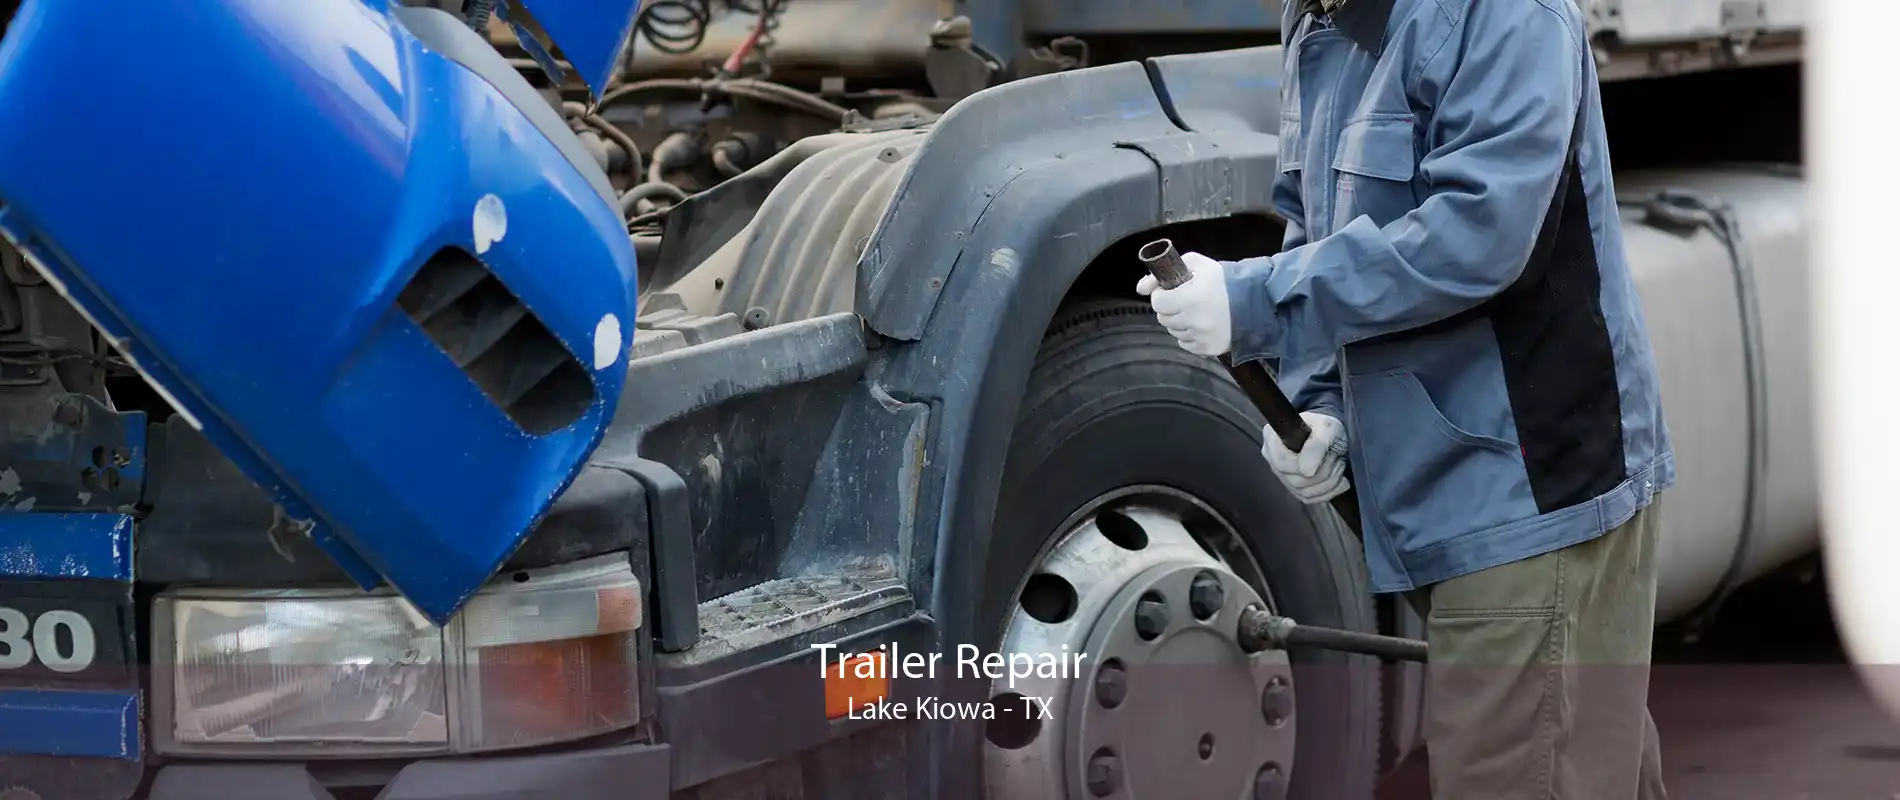 Trailer Repair Lake Kiowa - TX